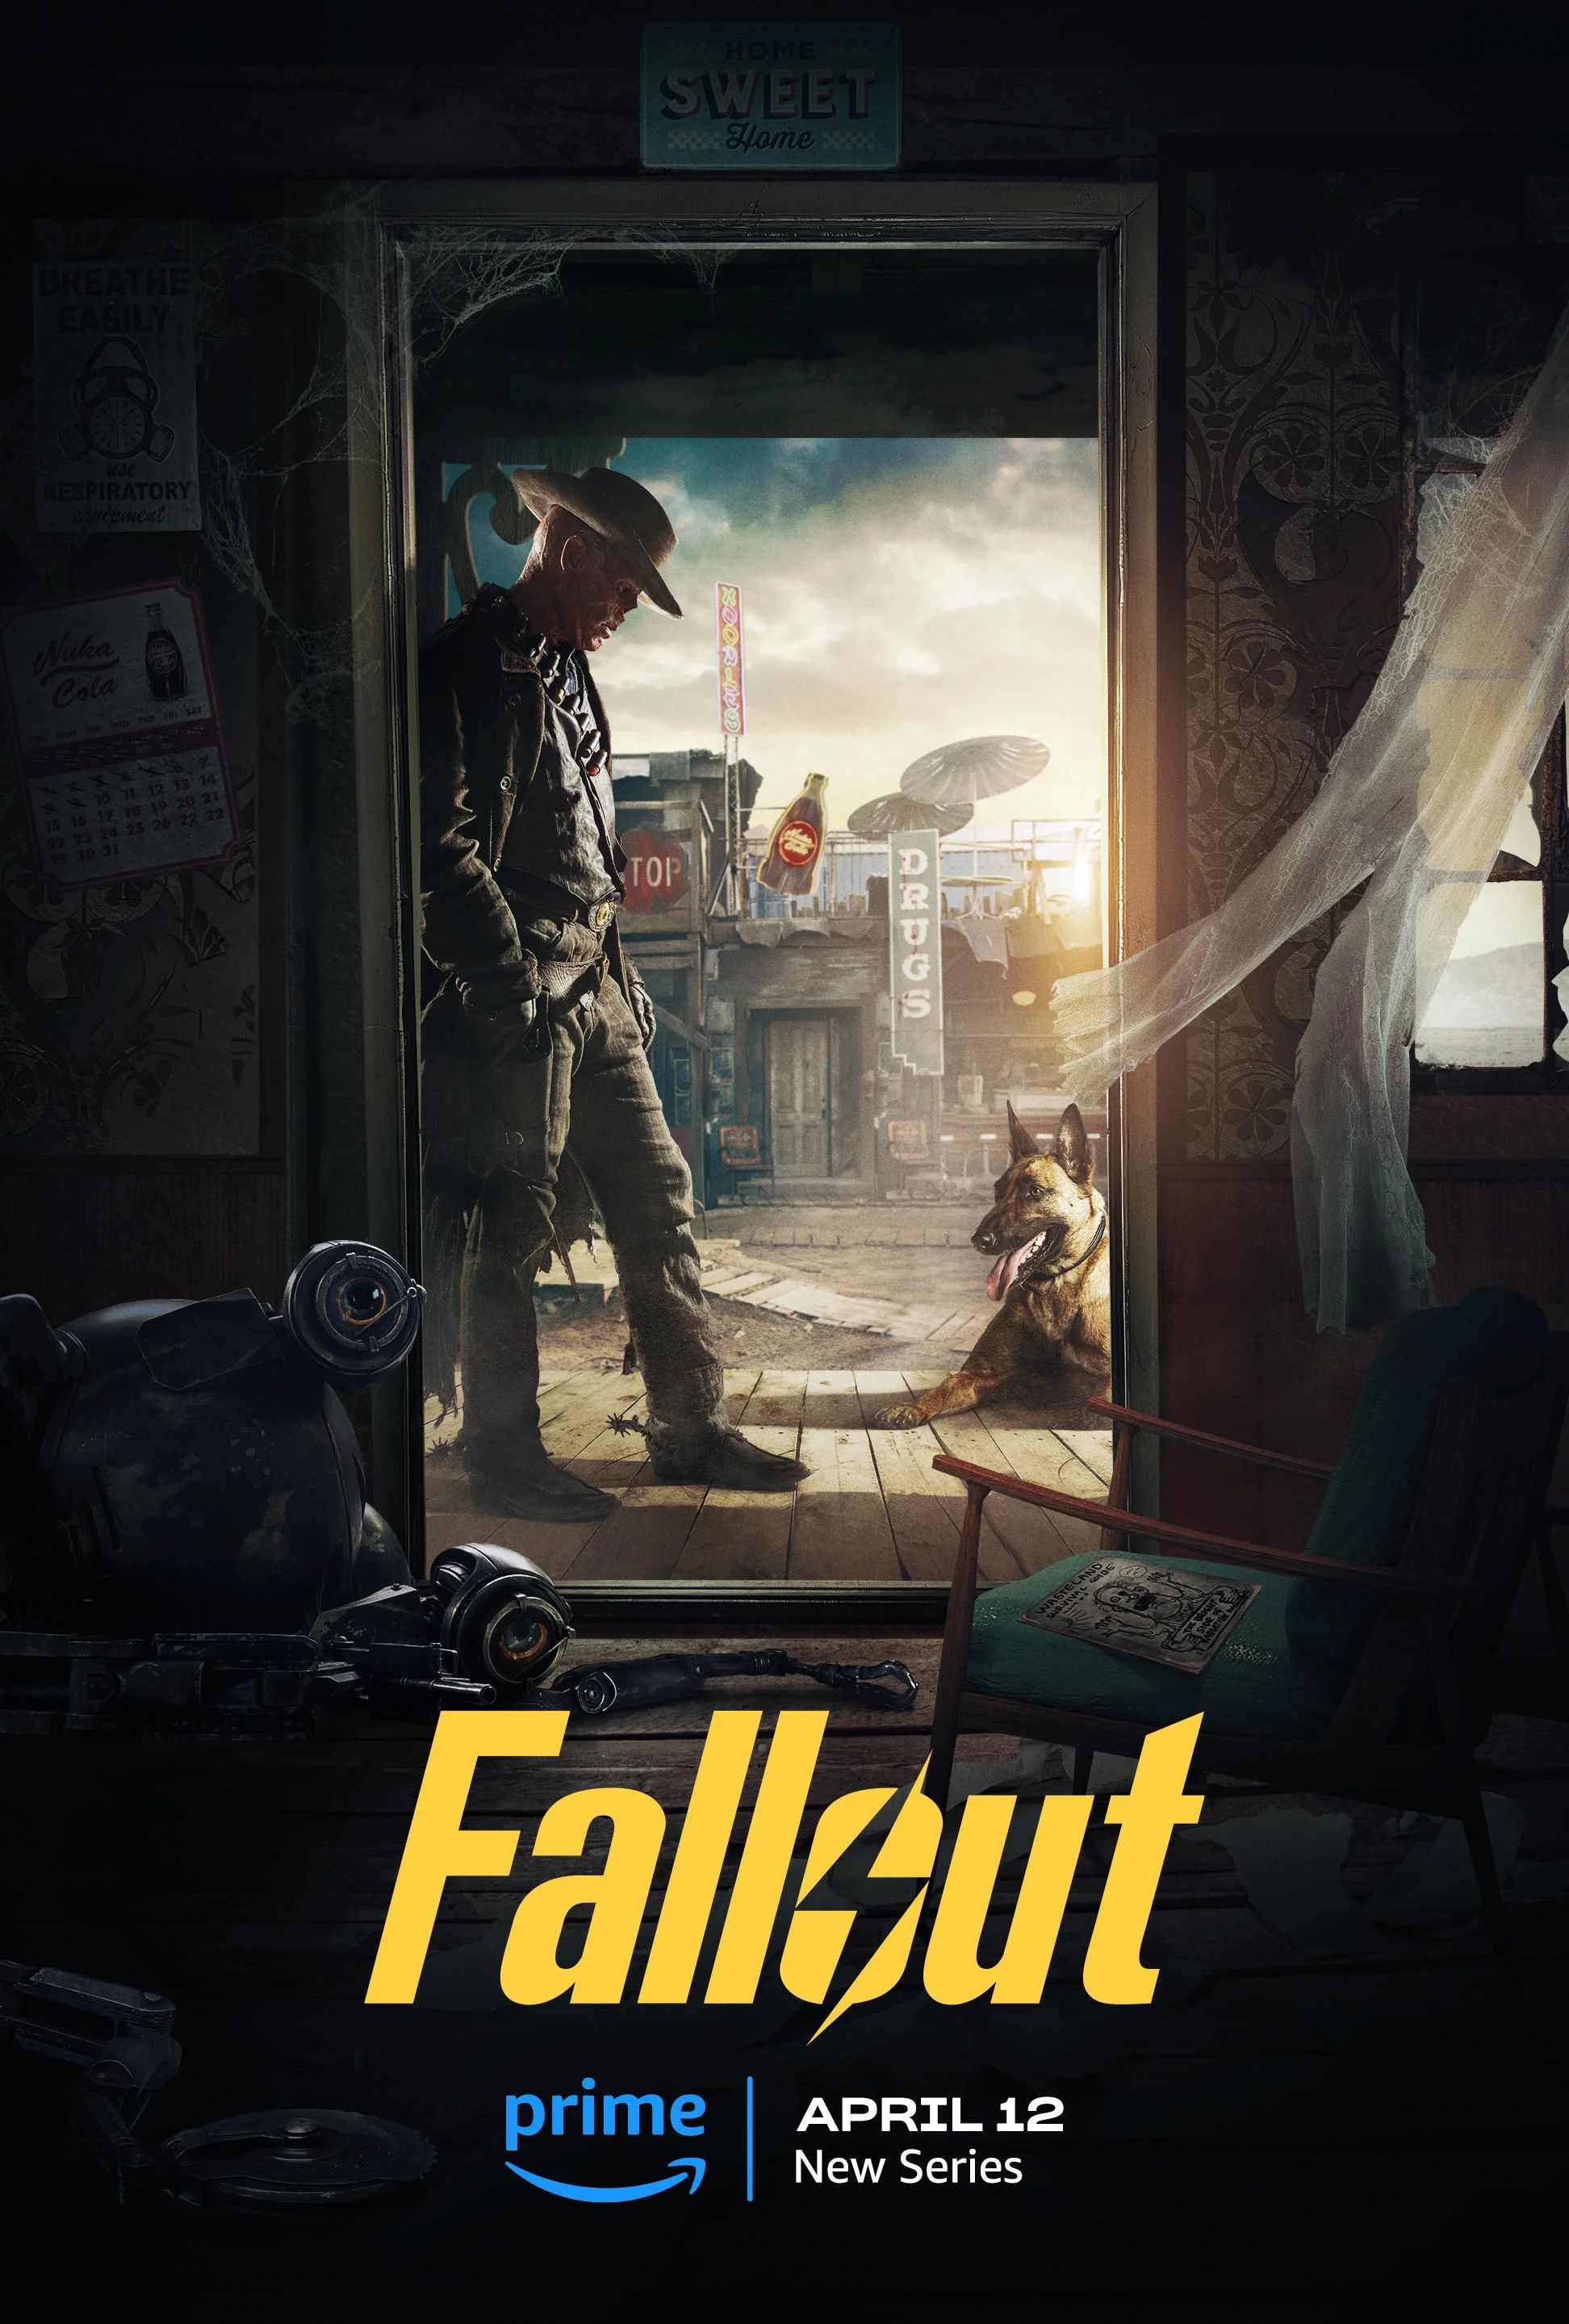  Купер Ховард из Fallout. Источник: Amazon